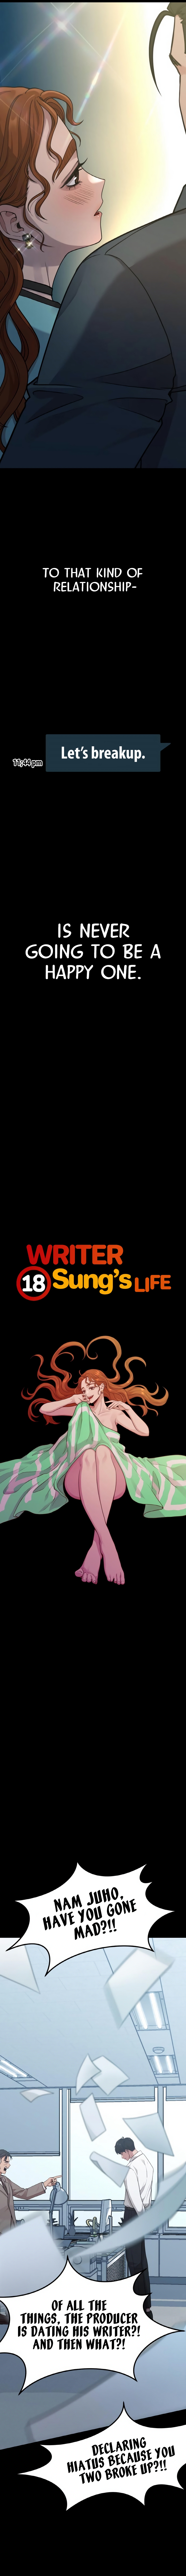 Writer Sung’s Life NEW image